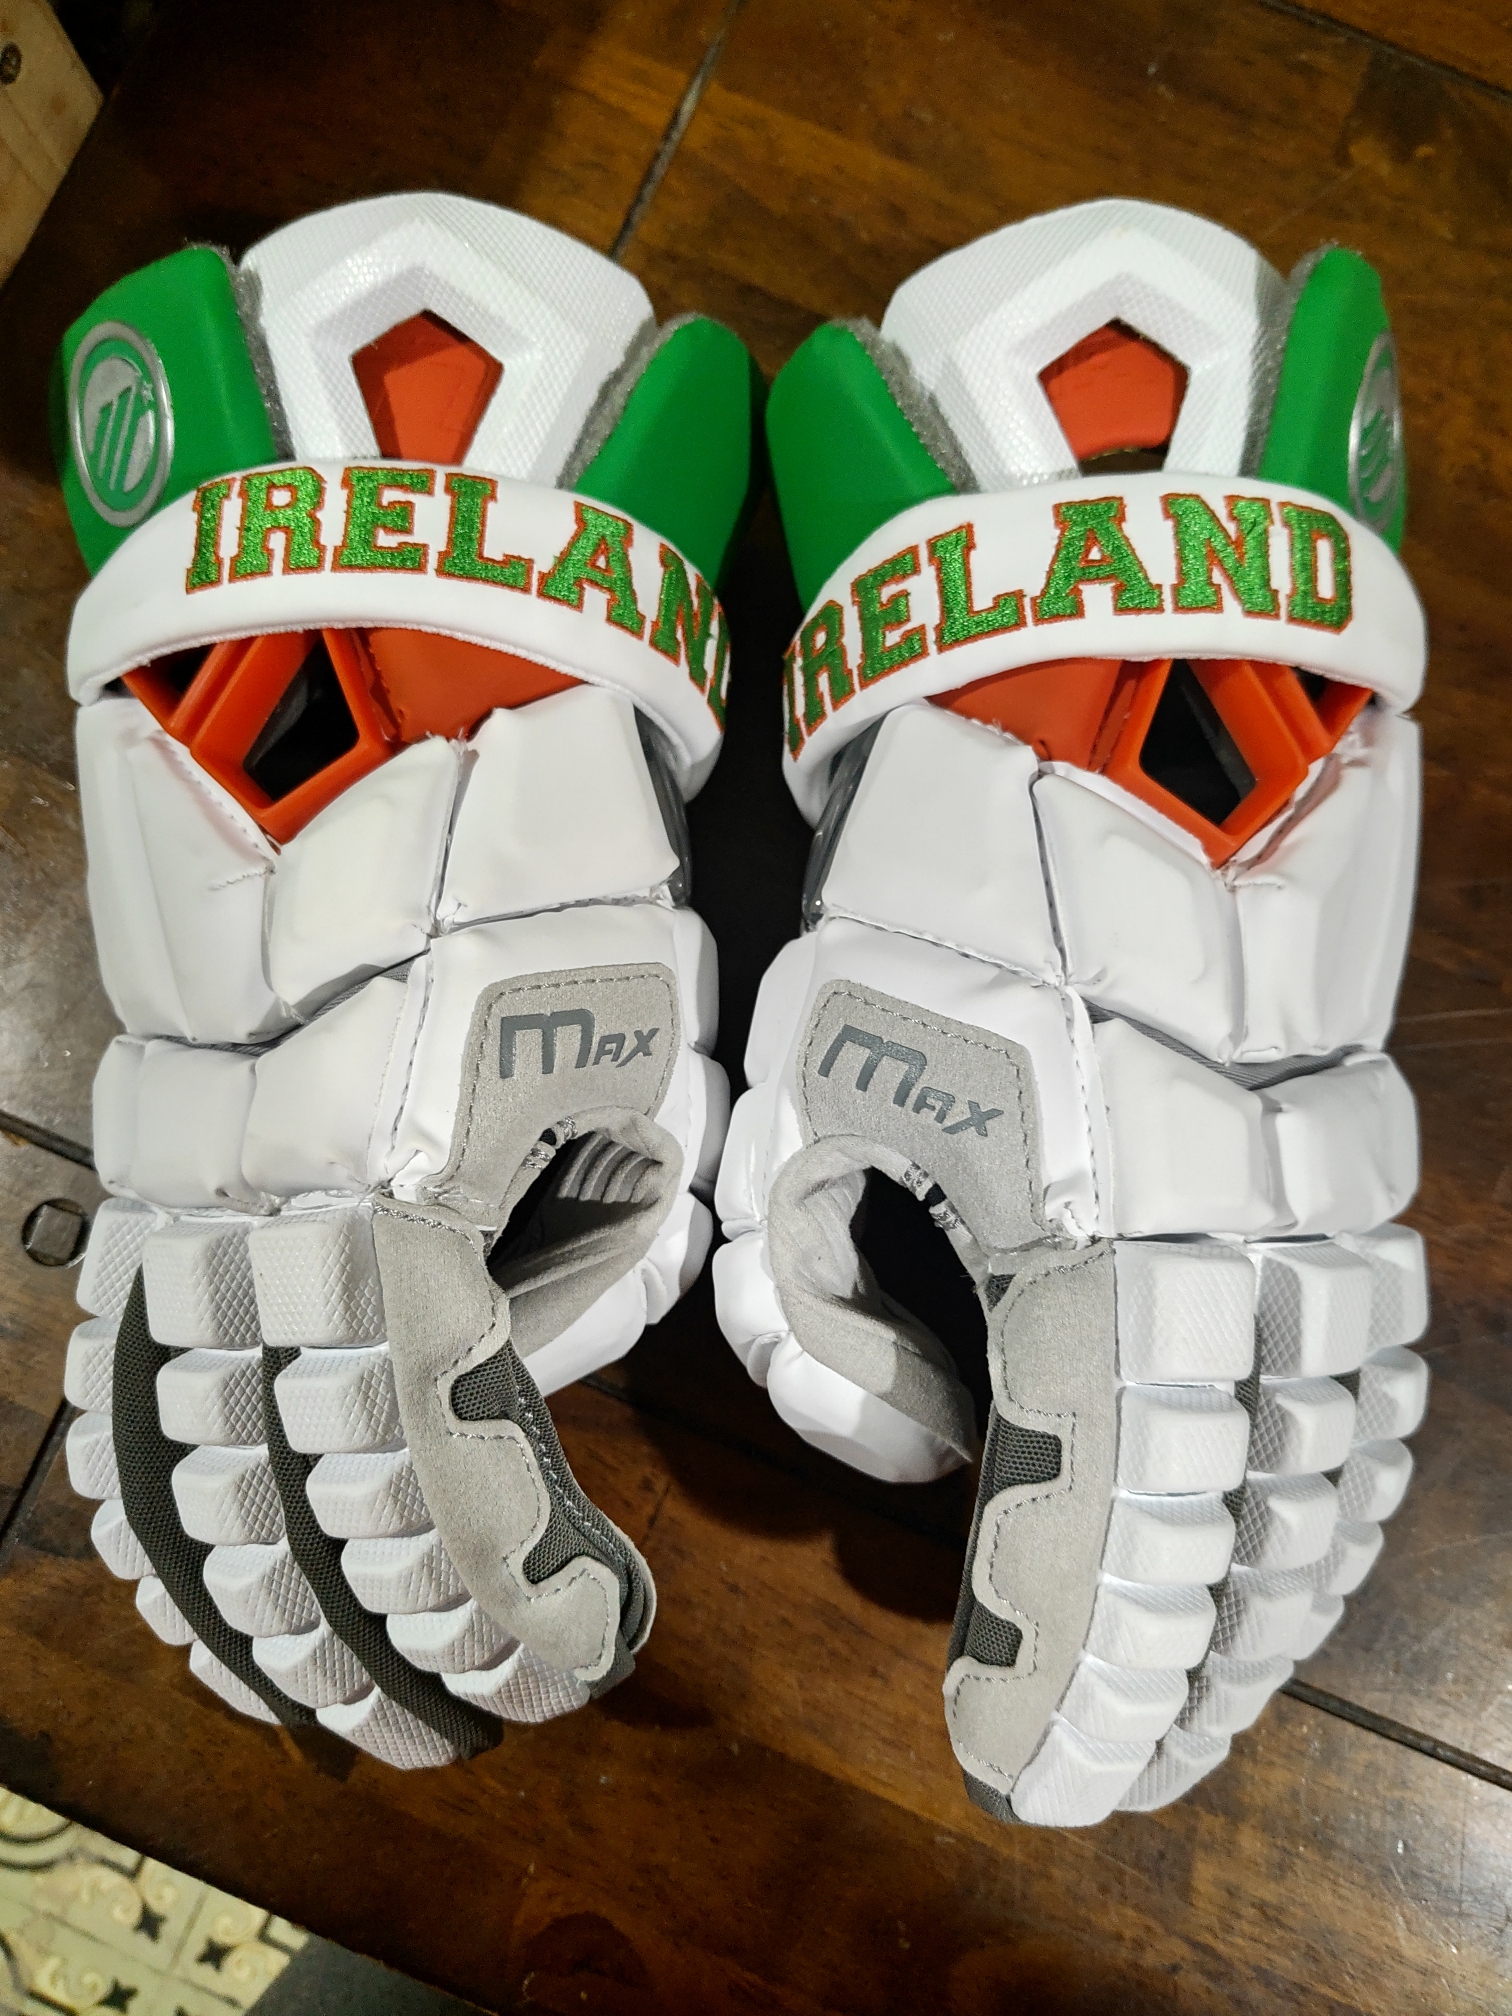 New Maverik Max Lacrosse Gloves 13" World Games Team Ireland